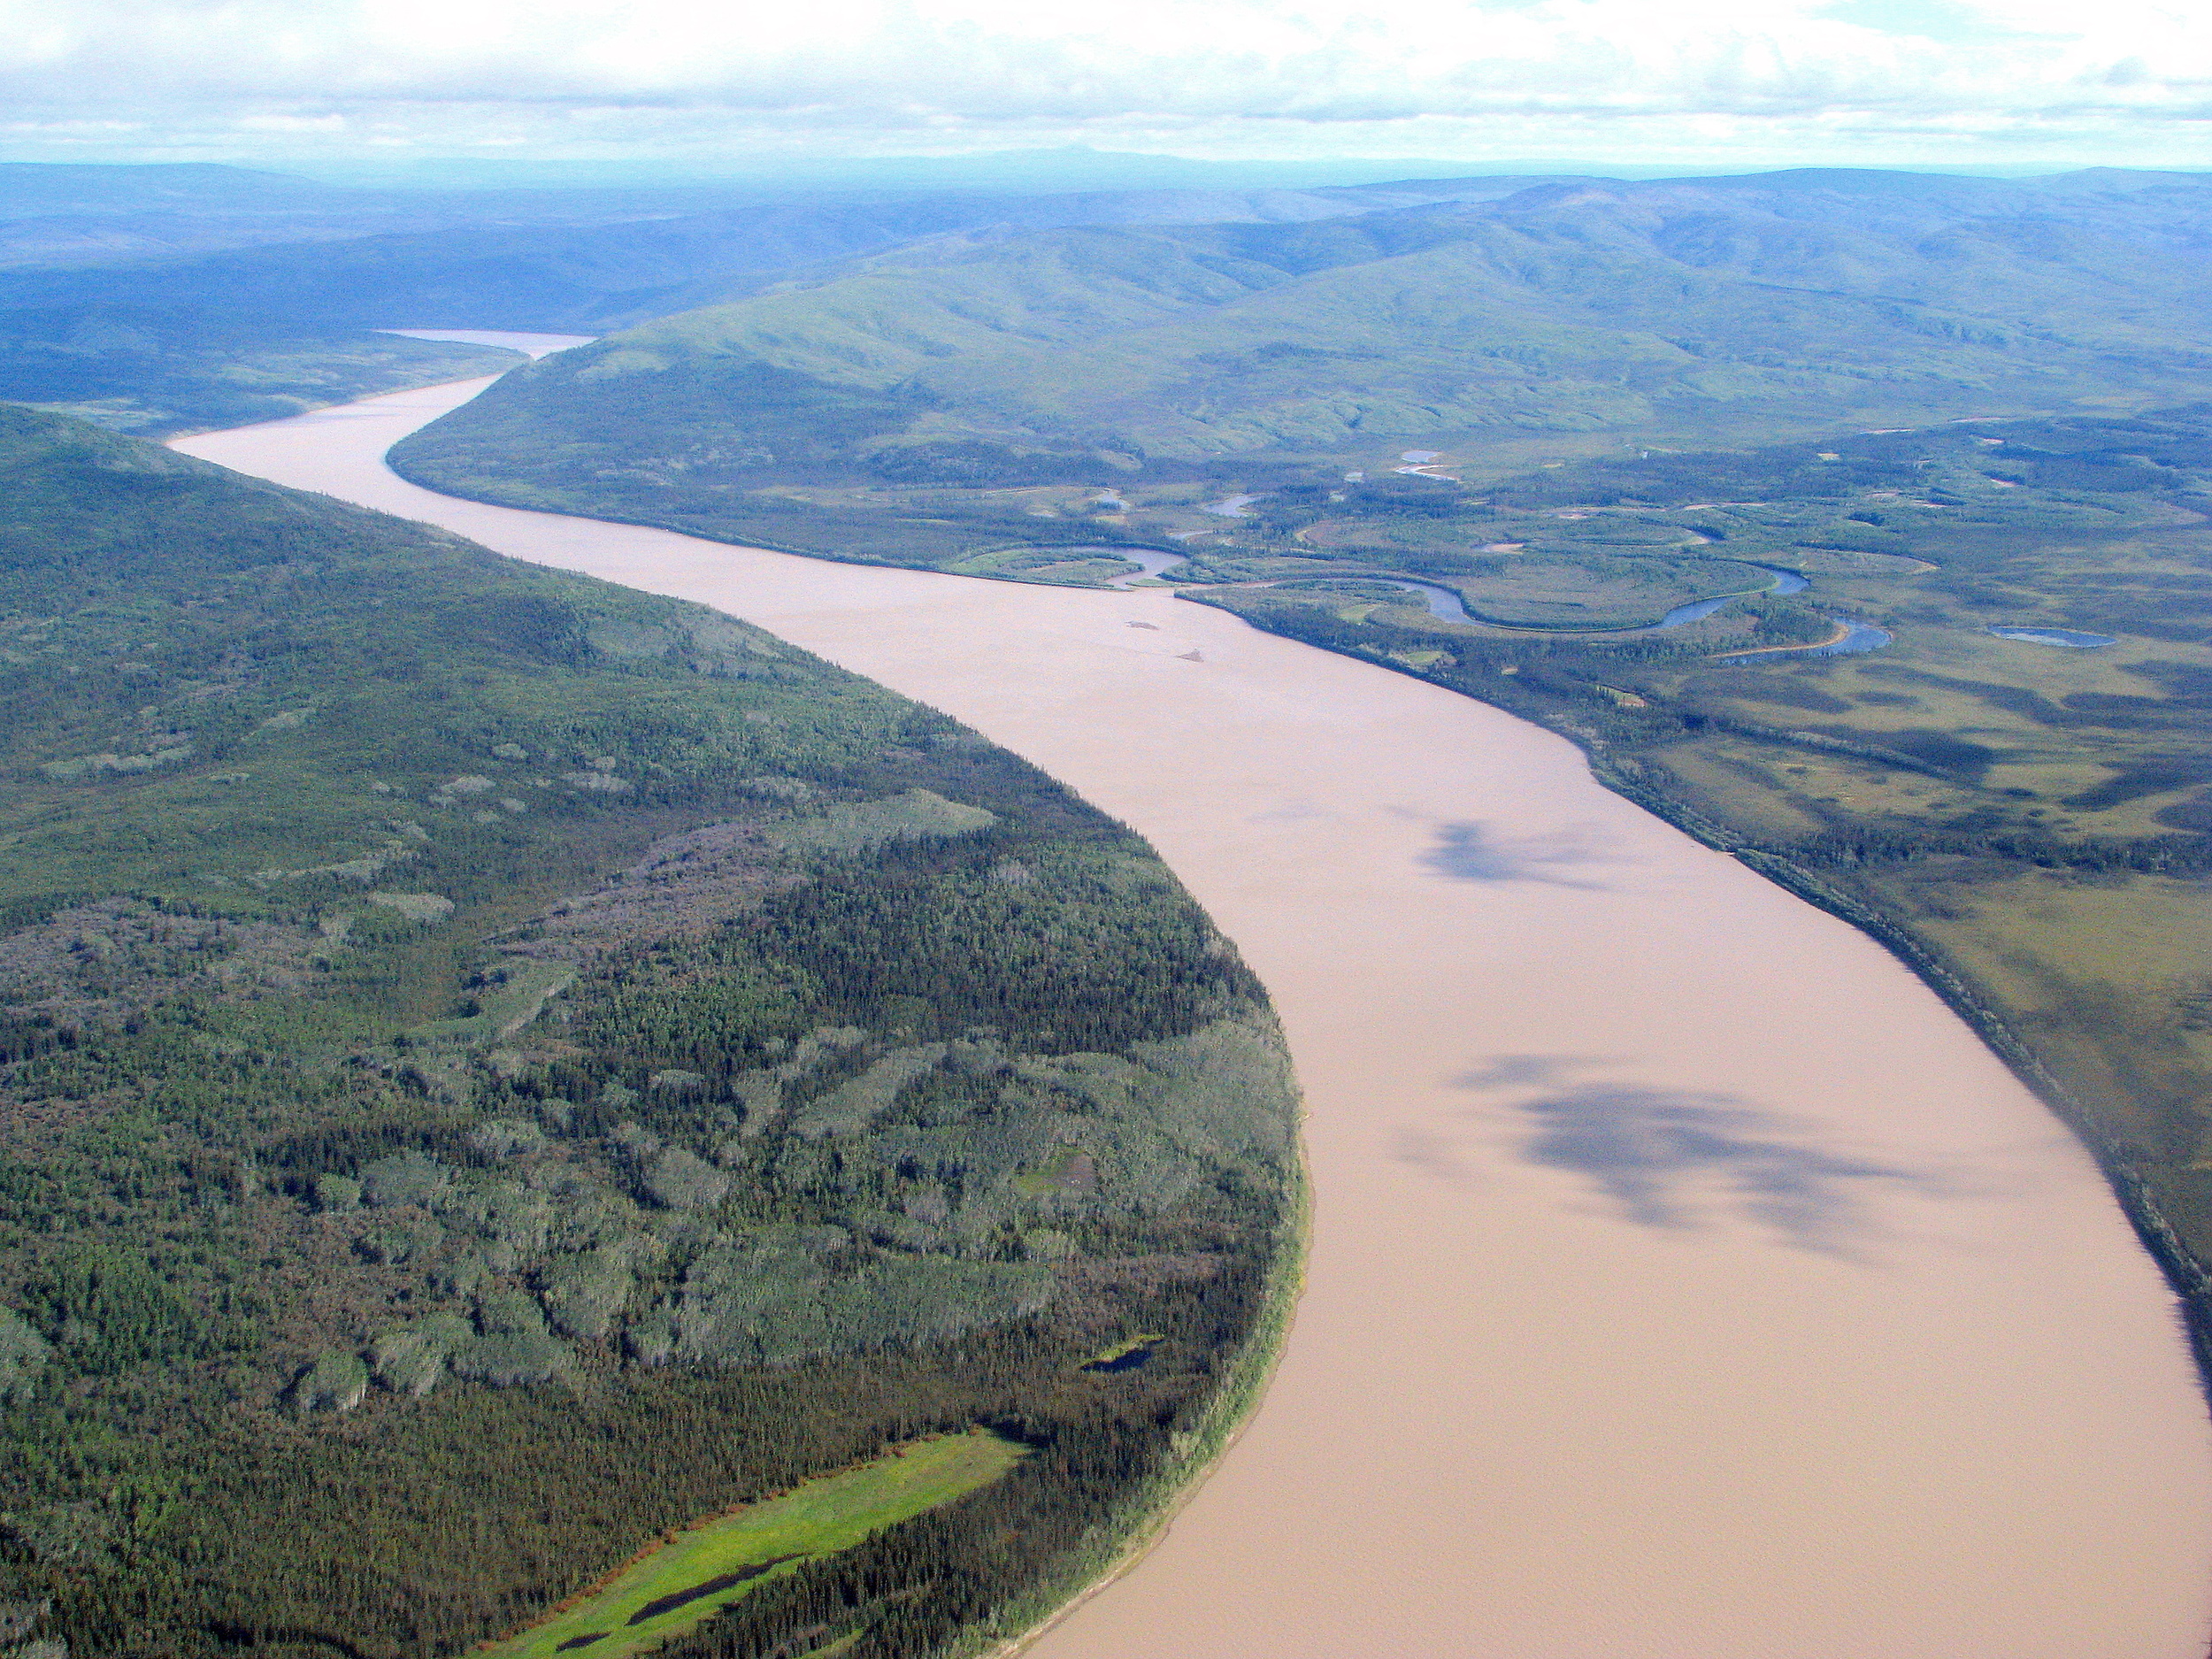 Река юкон впадает в океан. Река Юкон. Река Юкон США. Река Юкон Северная Америка. Устье реки Юкон.